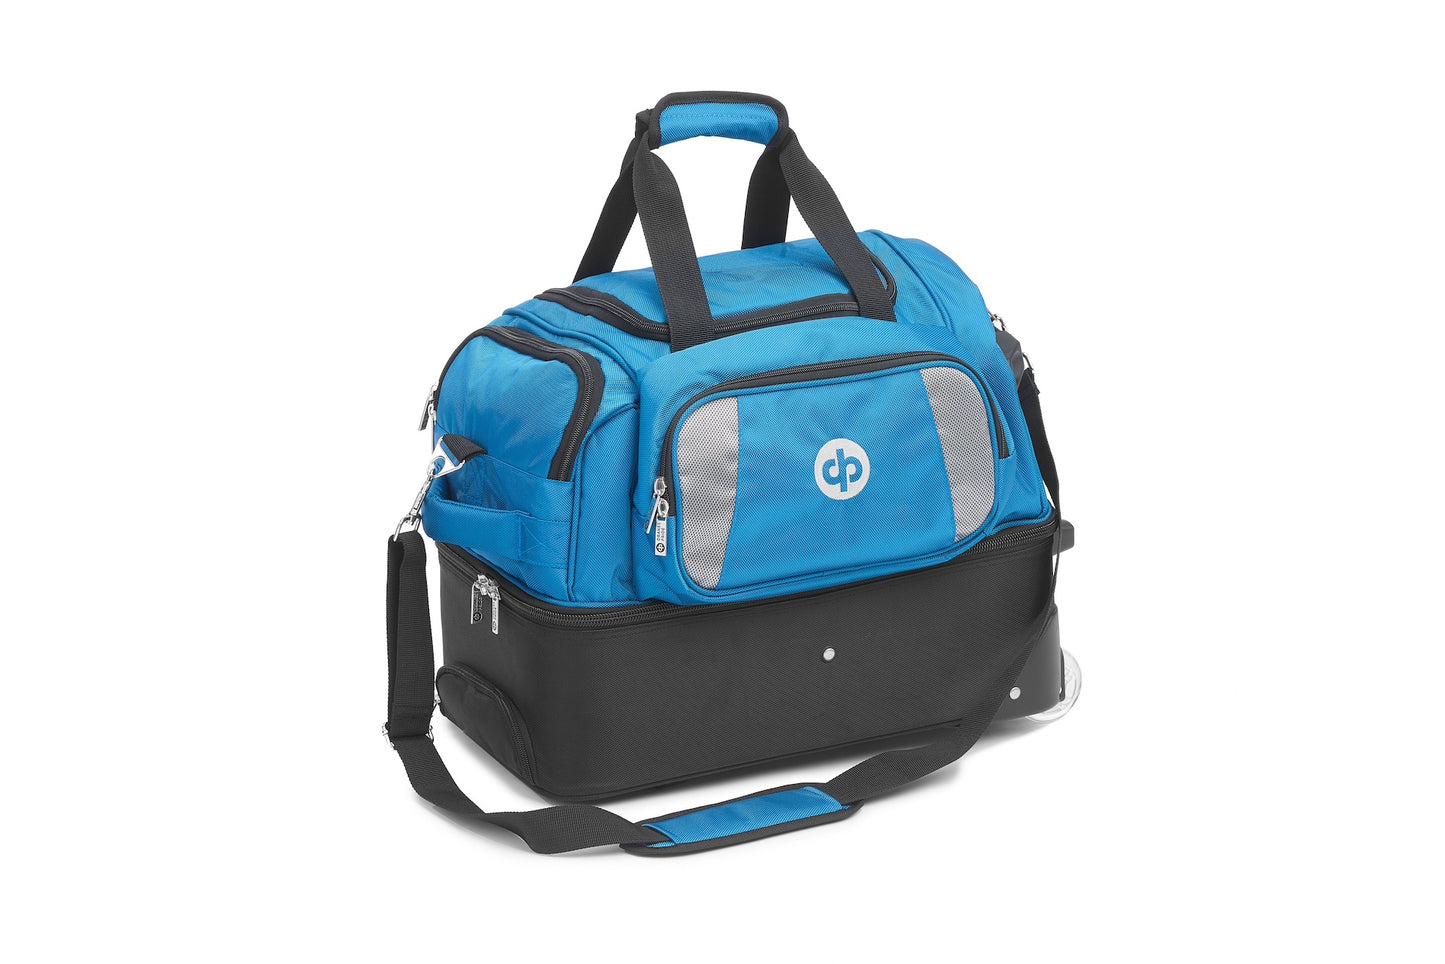 Drakes Pride Scooter Bag - Petrol Blue